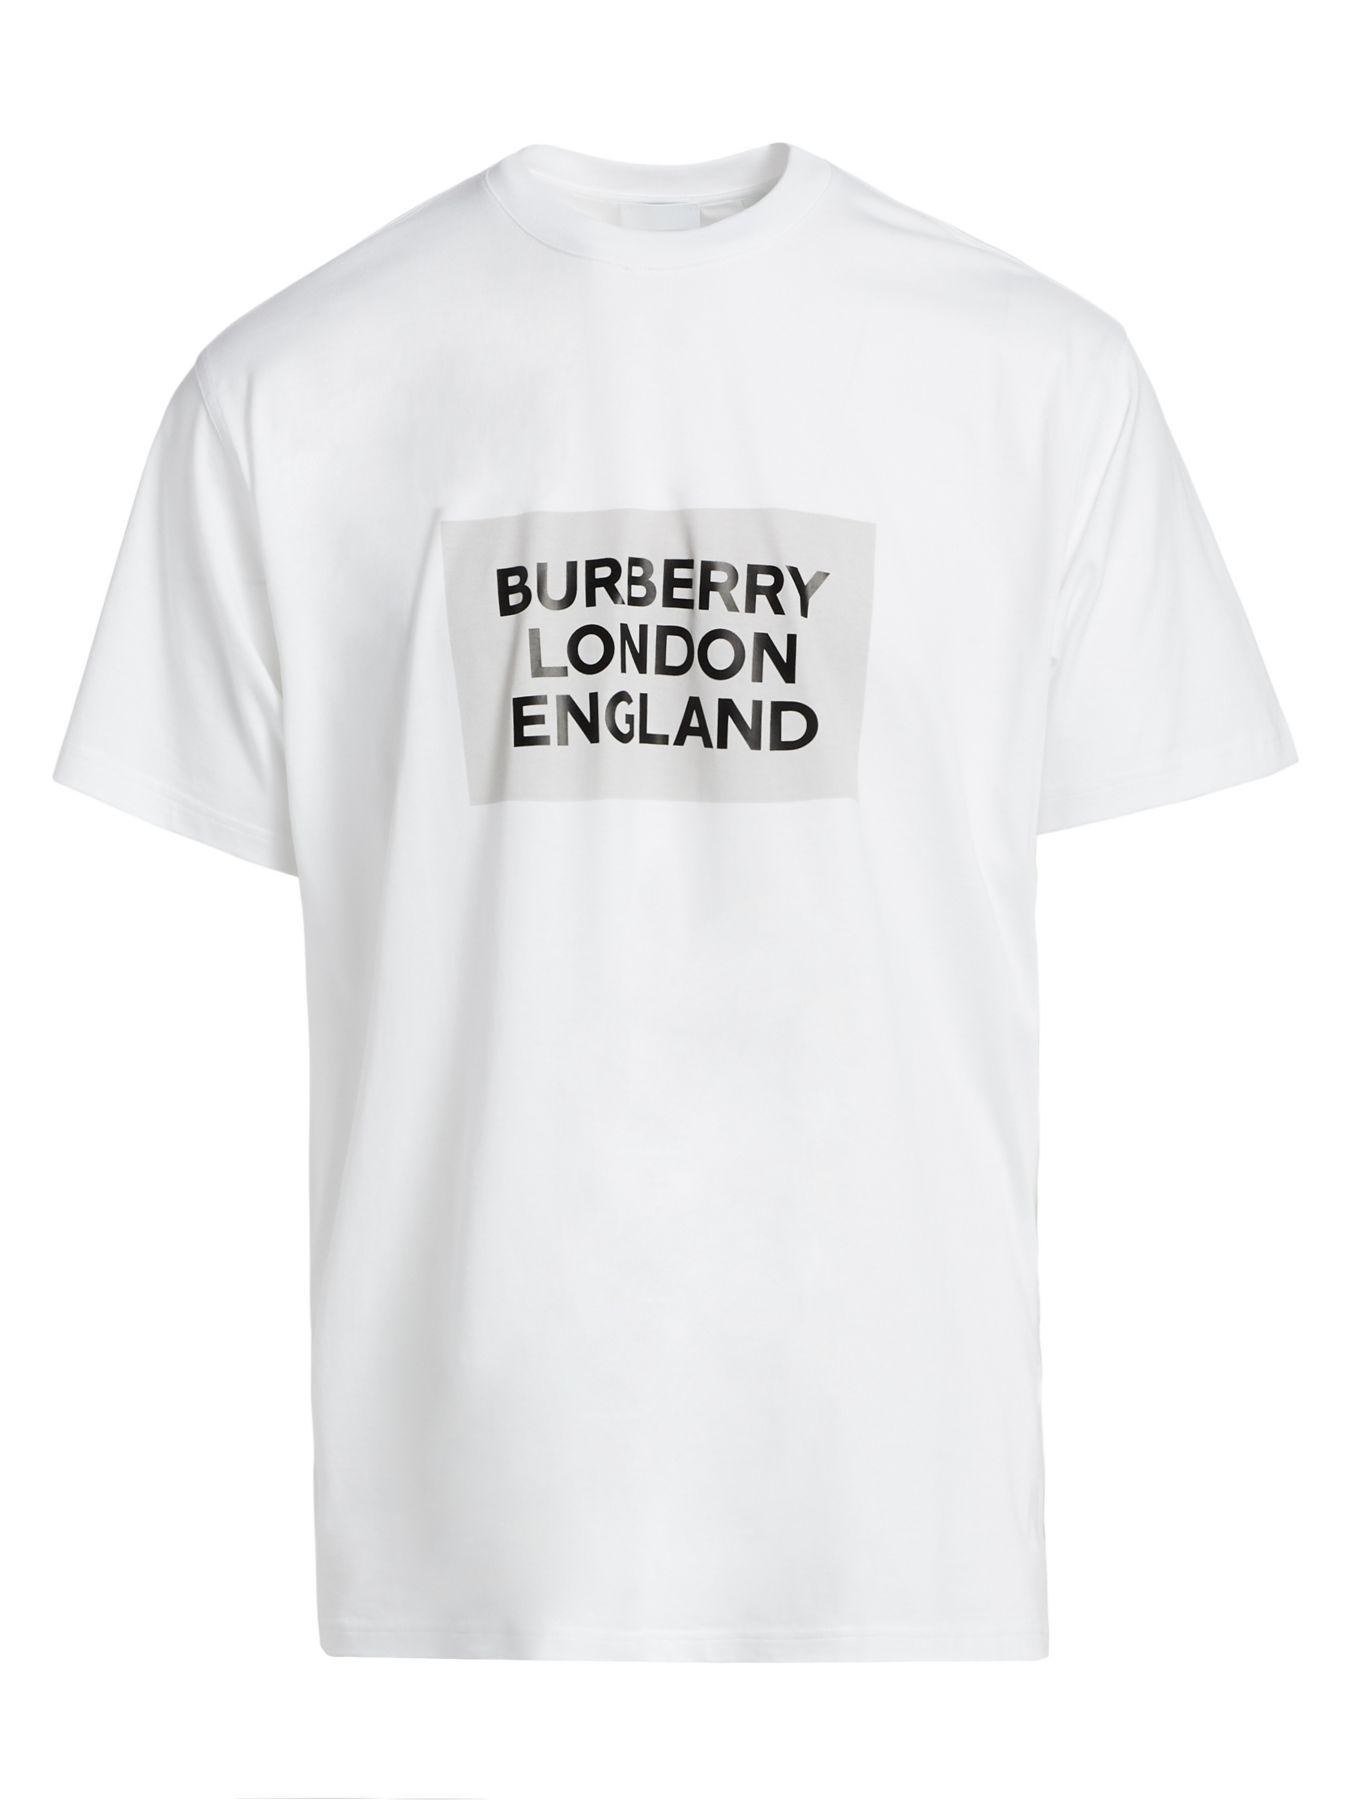 Actualizar 88+ imagen burberry london shirt logo - Abzlocal.mx